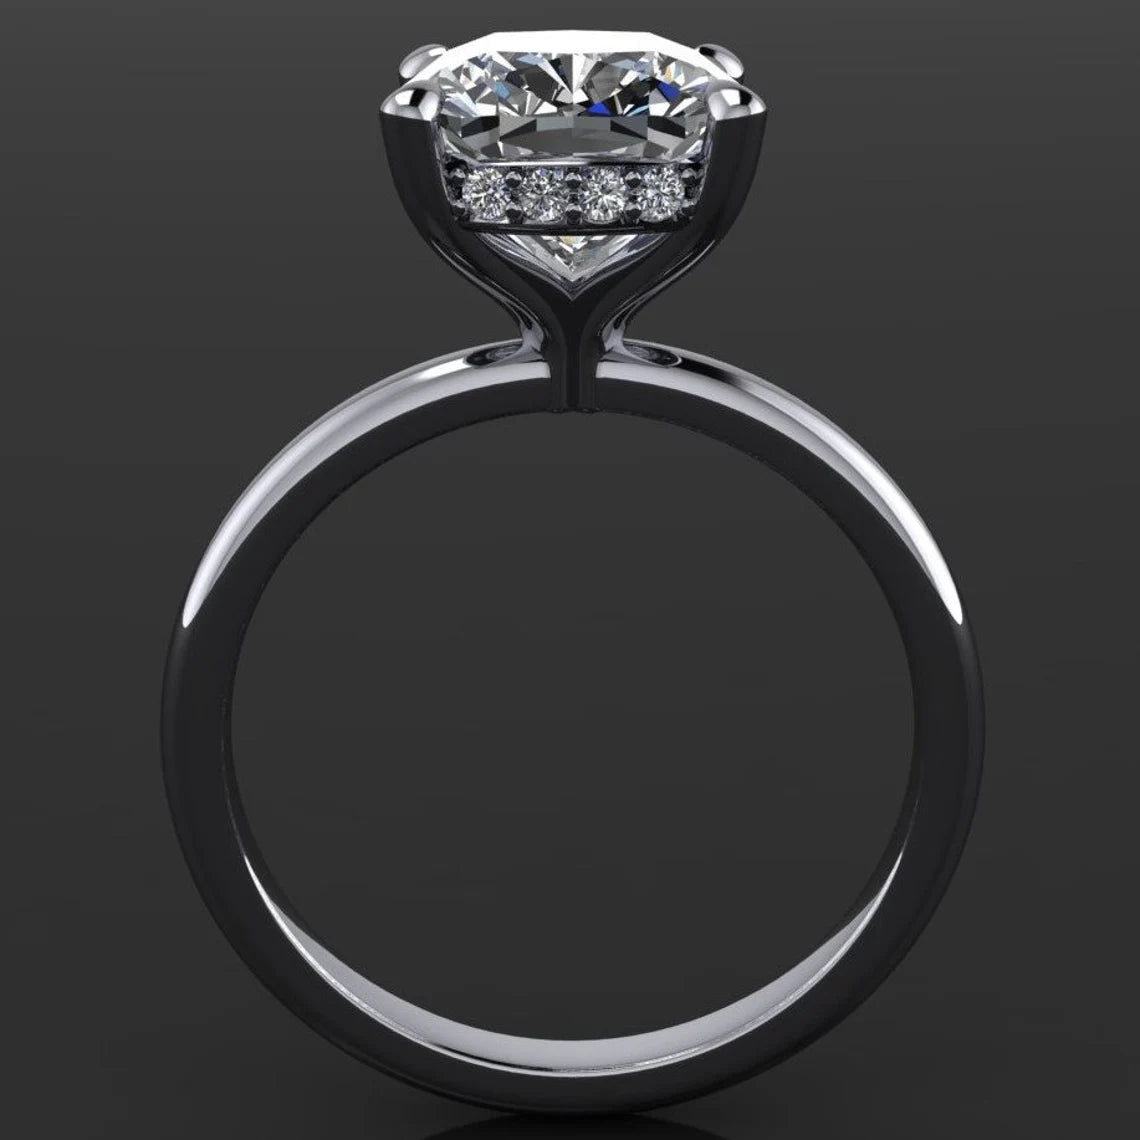 3 carat elongated cushion cut ZAYA moissanite engagement ring - naked shay ring, diamond side halo - J Hollywood Designs